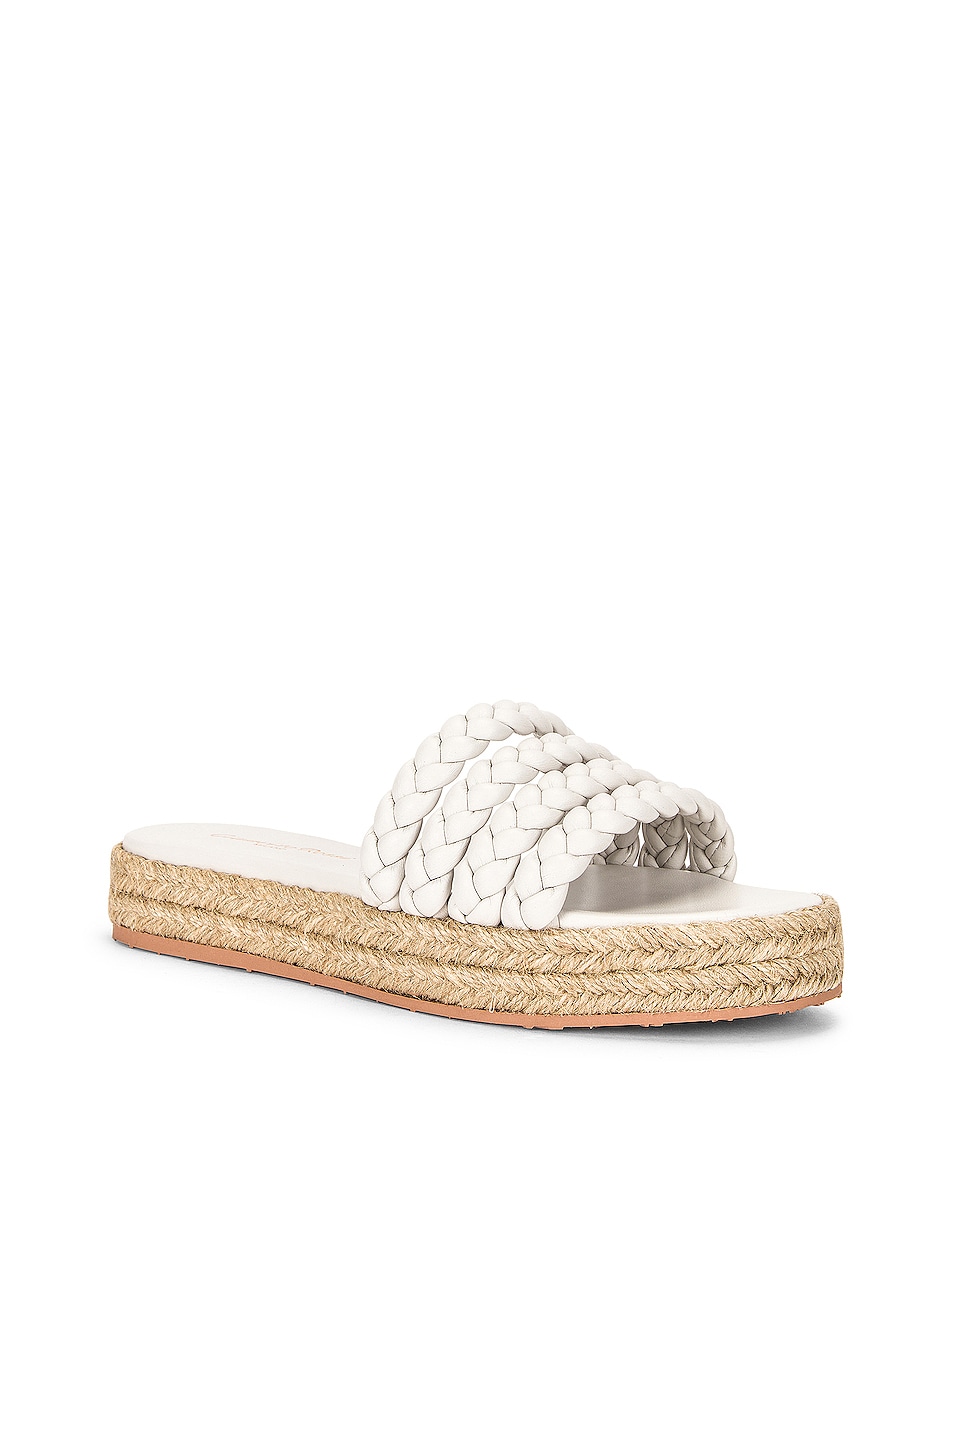 Gianvito Rossi Marbella Braided Sandals in White & Naturale | FWRD